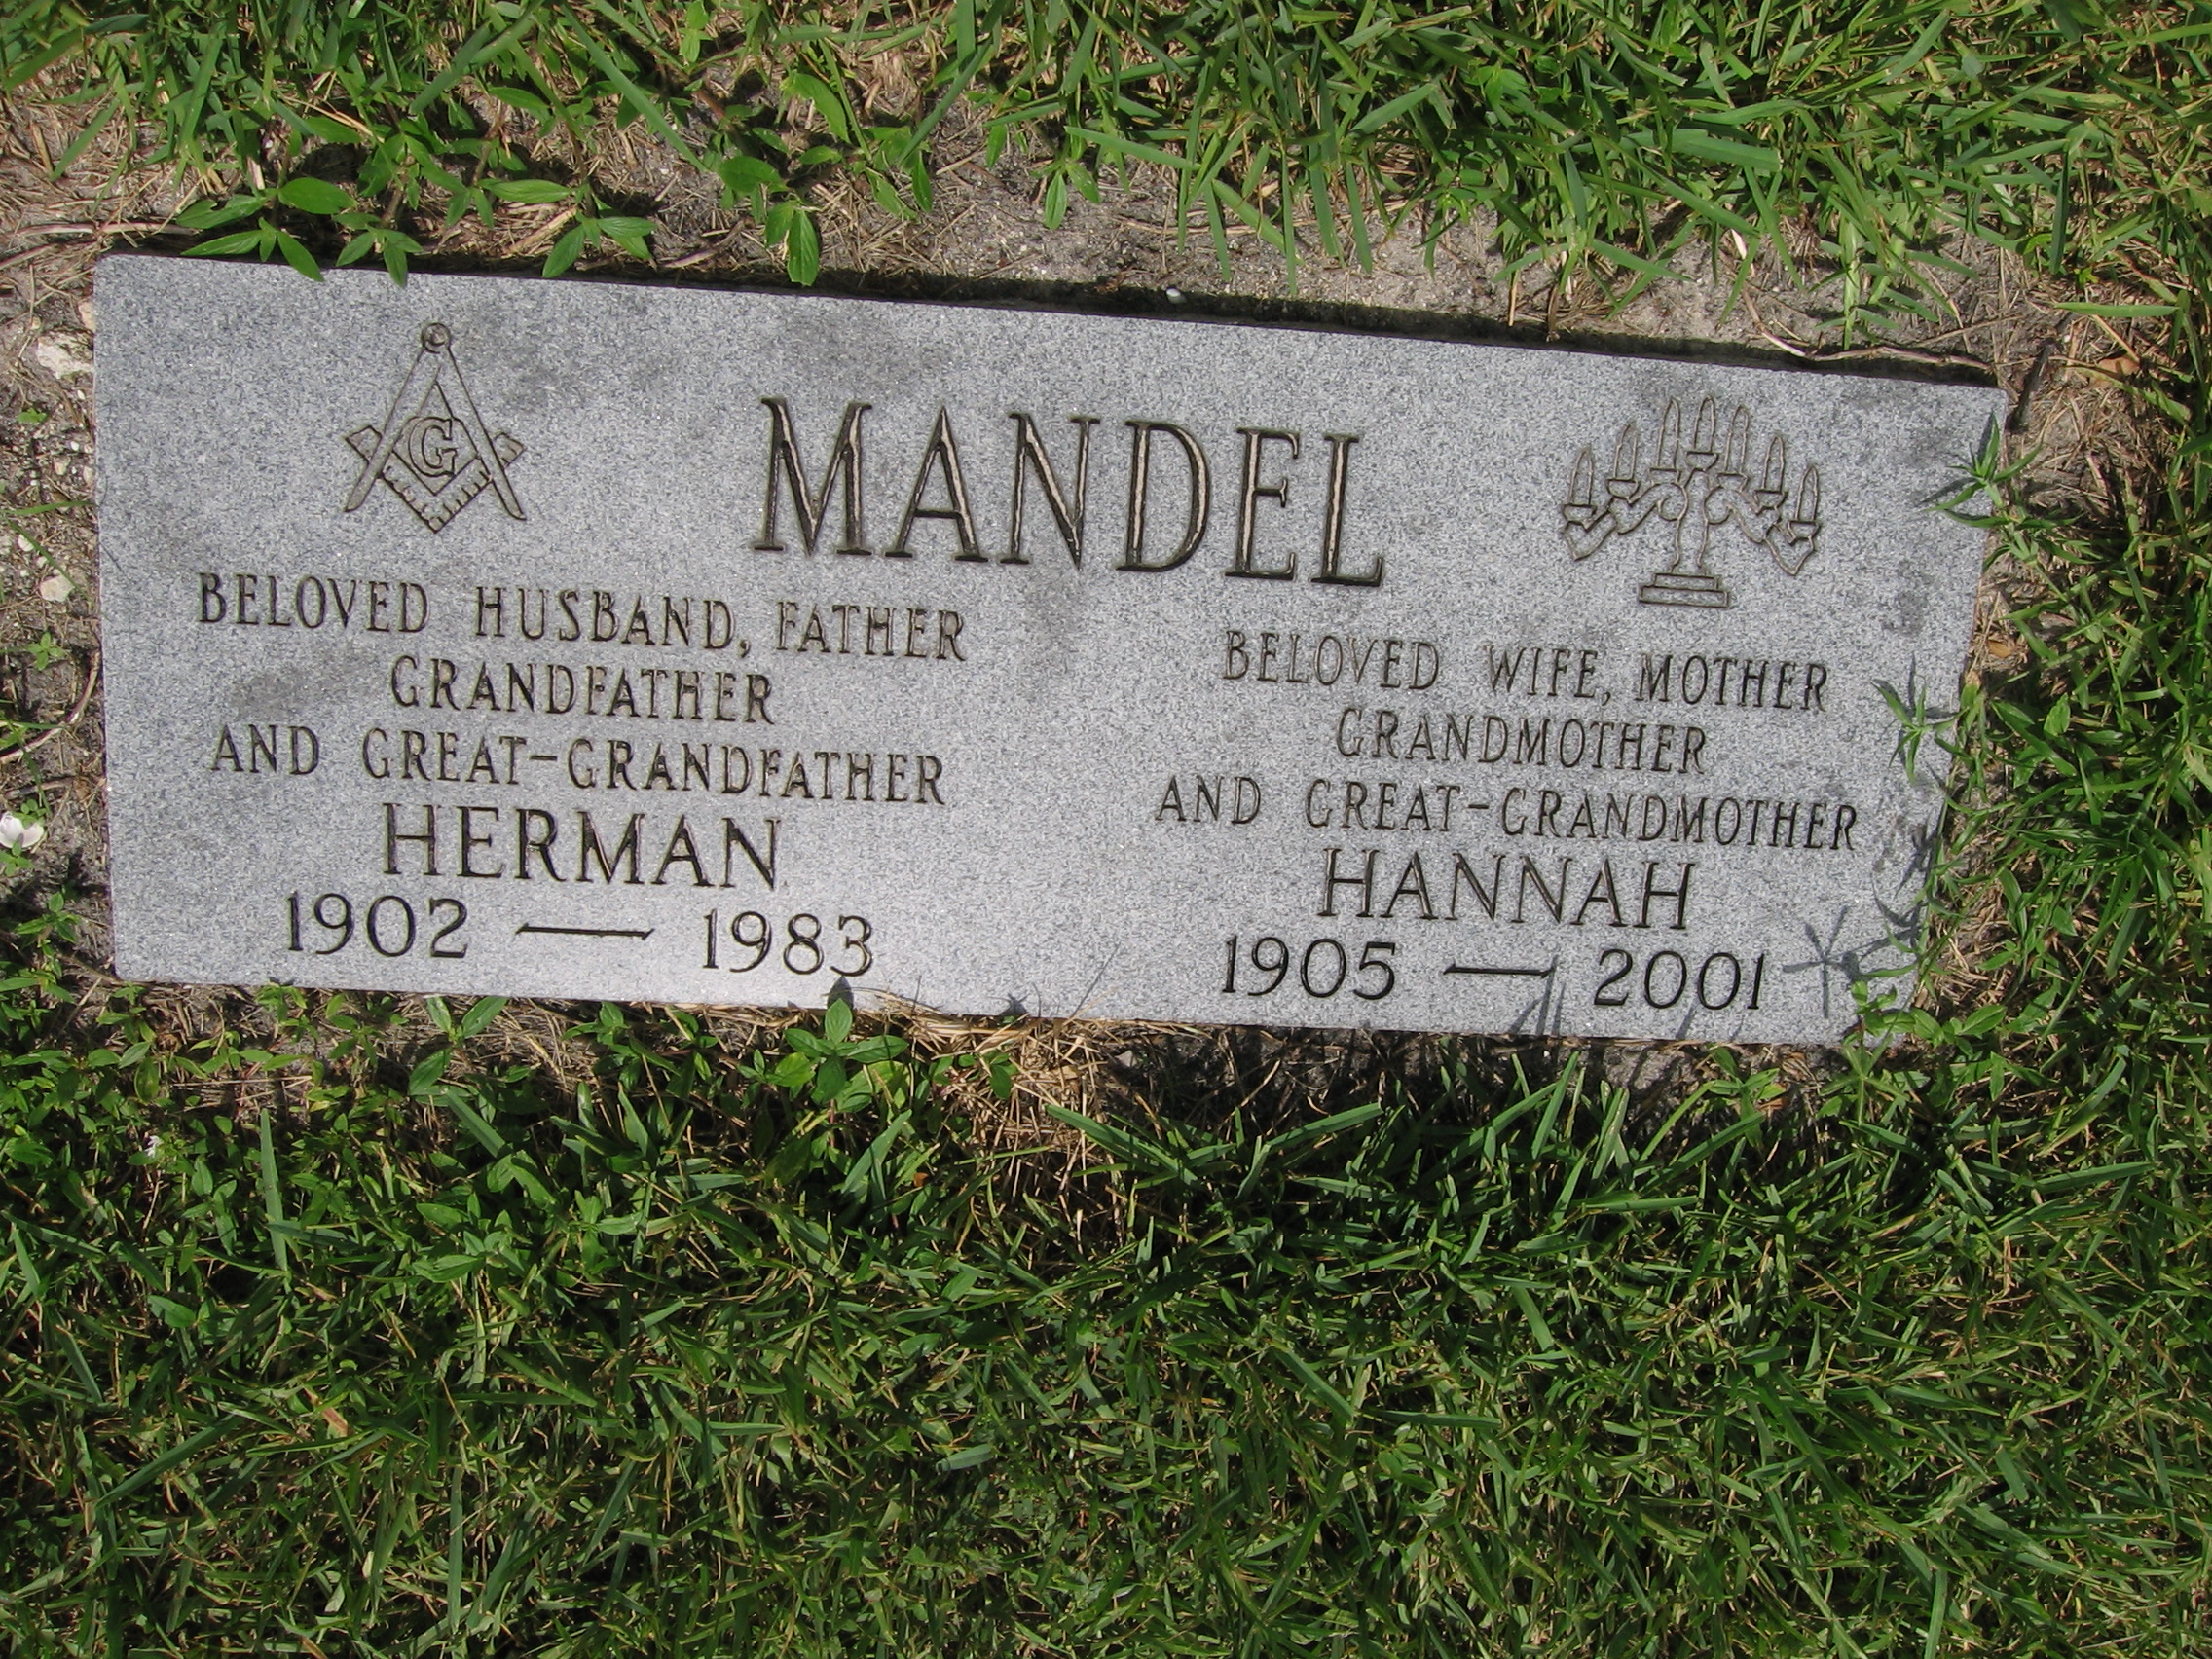 Herman Mandel